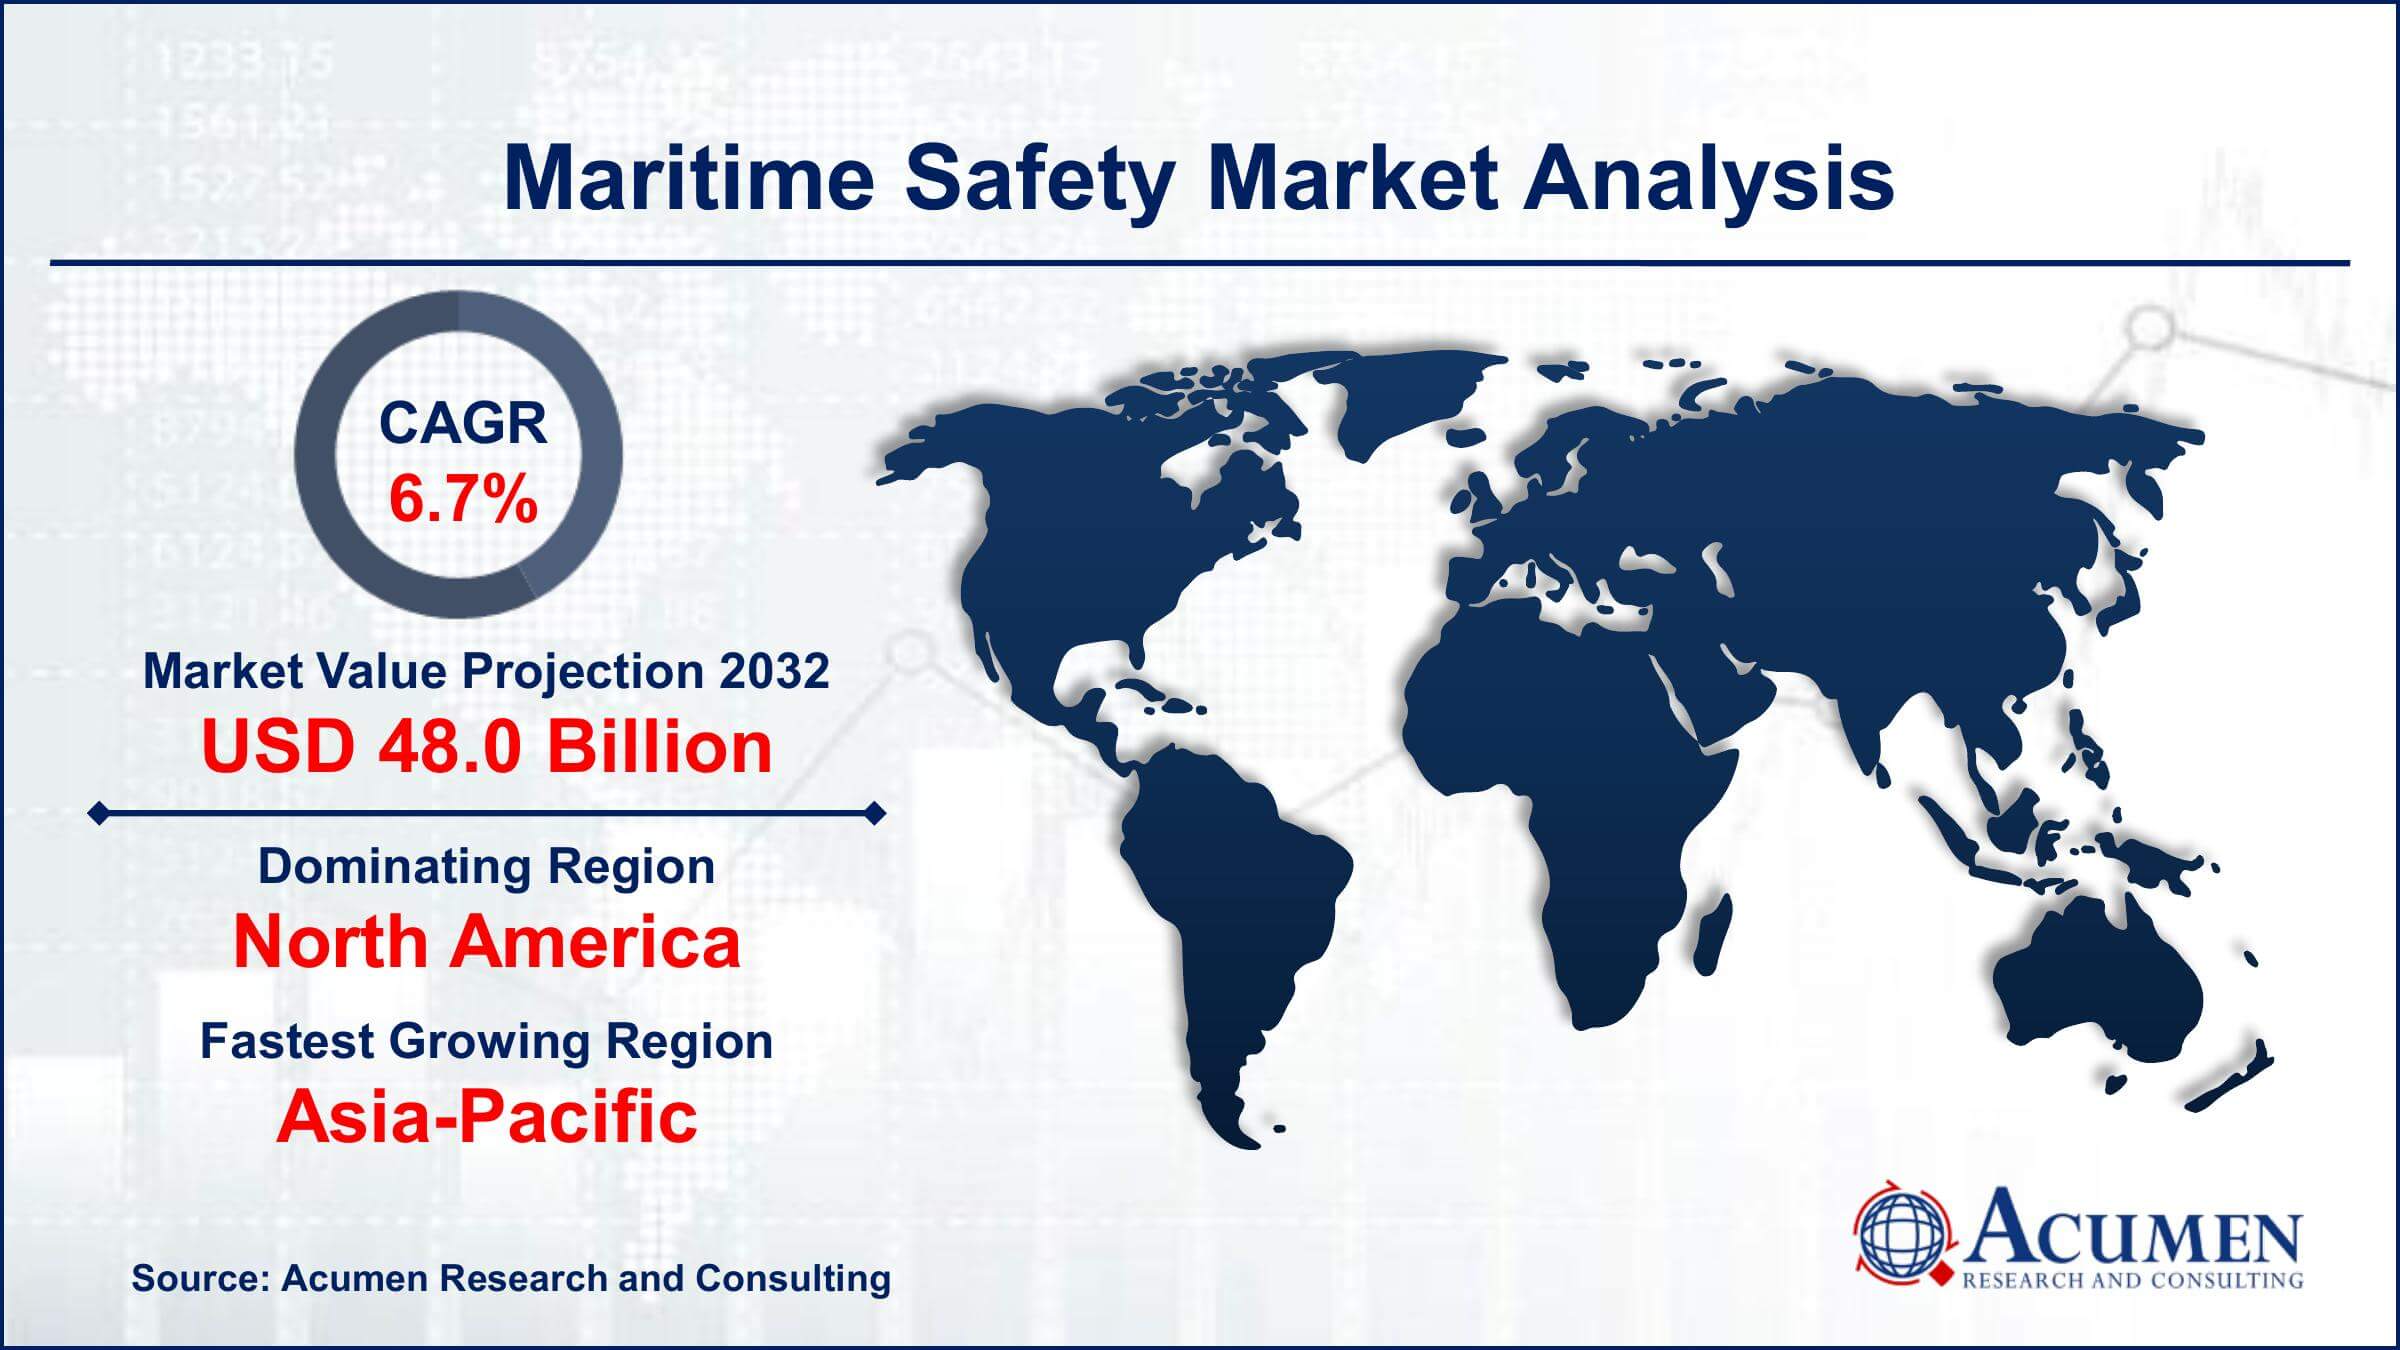 Global Maritime Safety Market Trends